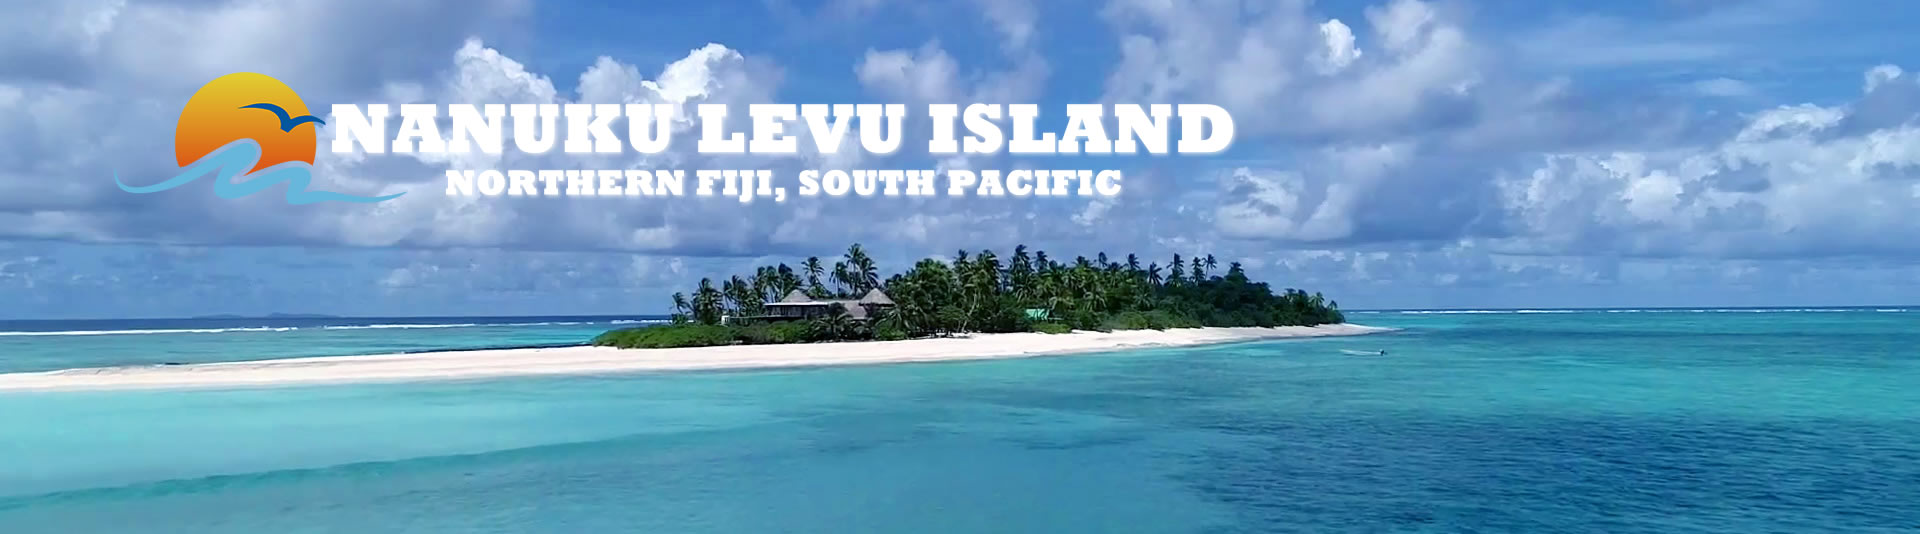 Nanuku Levu Island header